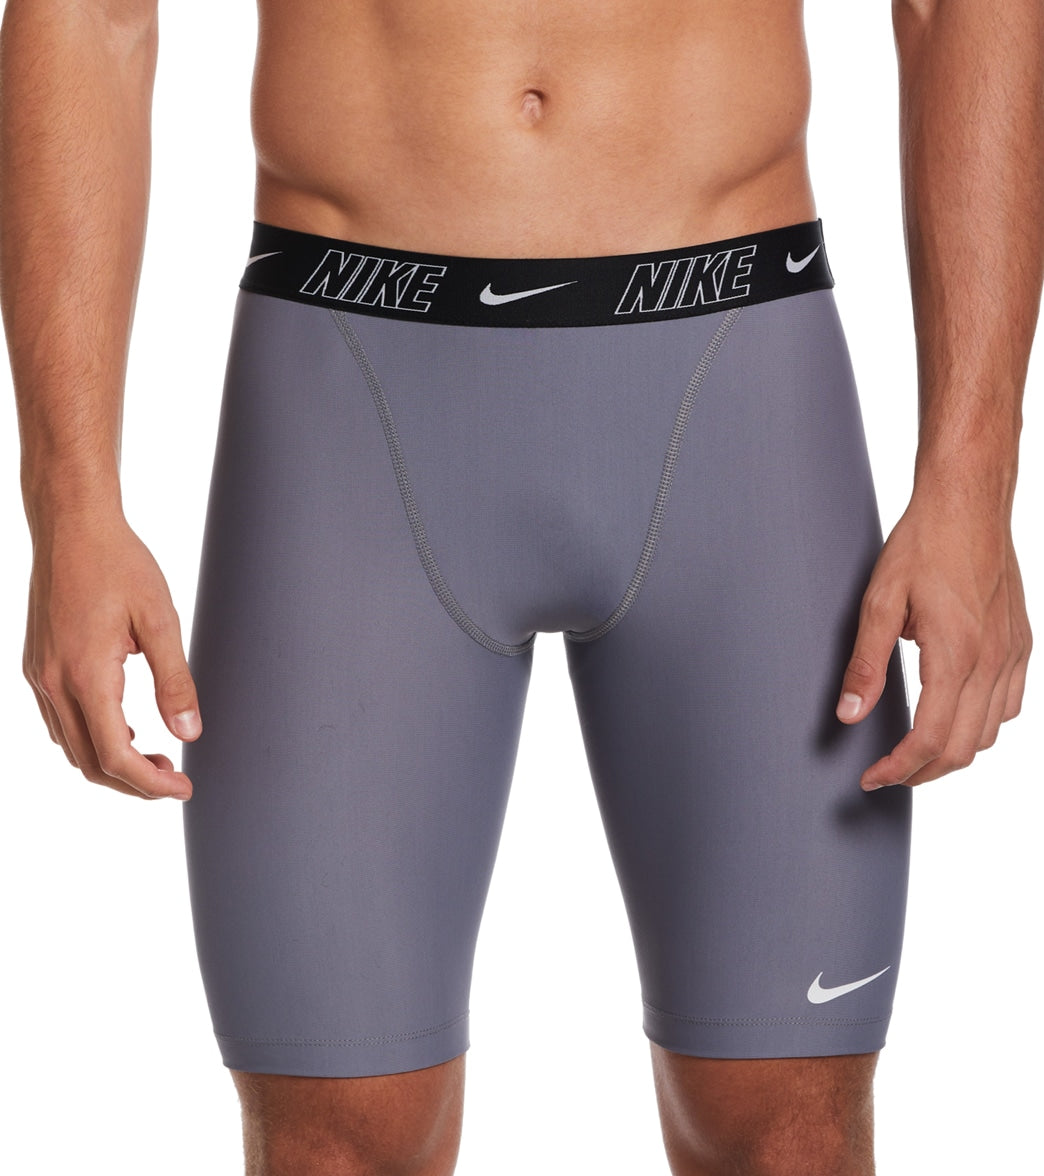 Nike Men's Tape Swimsuit at SwimOutlet.com